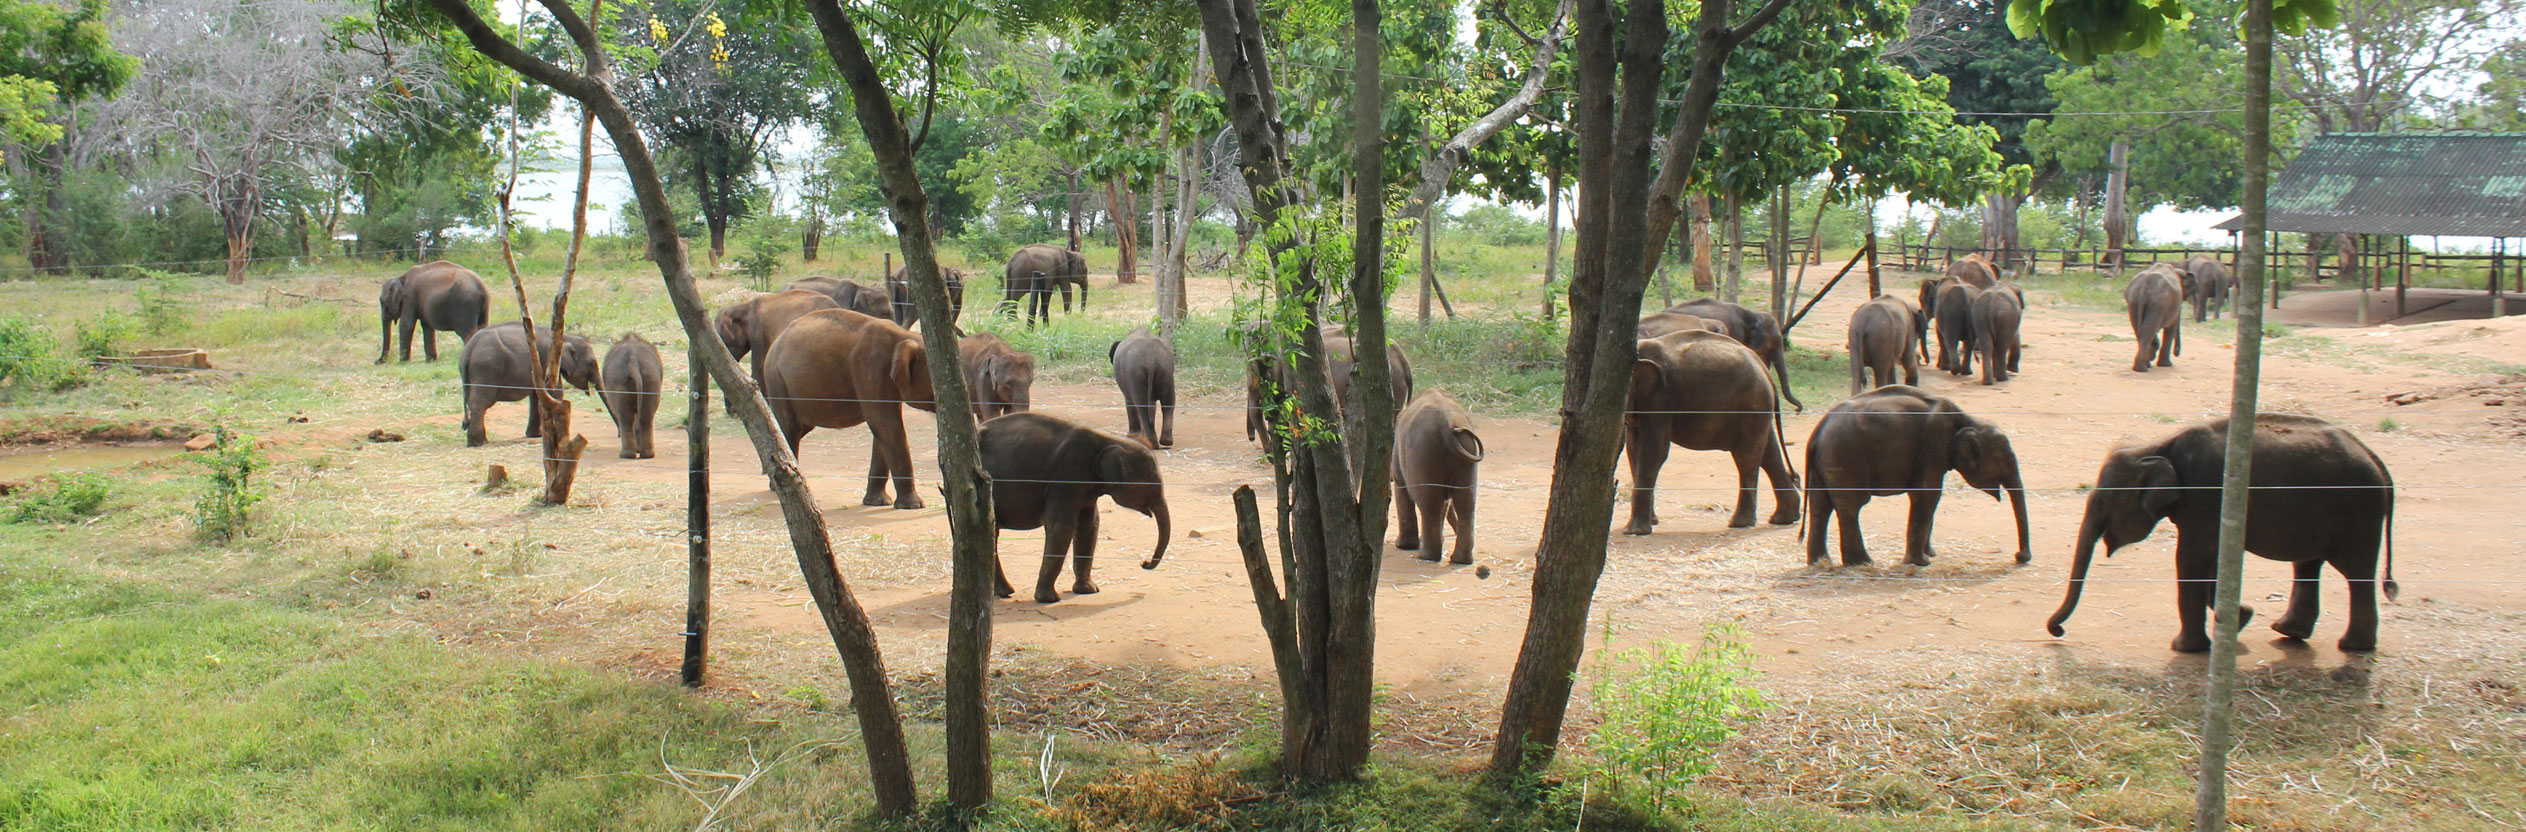 Elephant Transit Home Sri Lanka